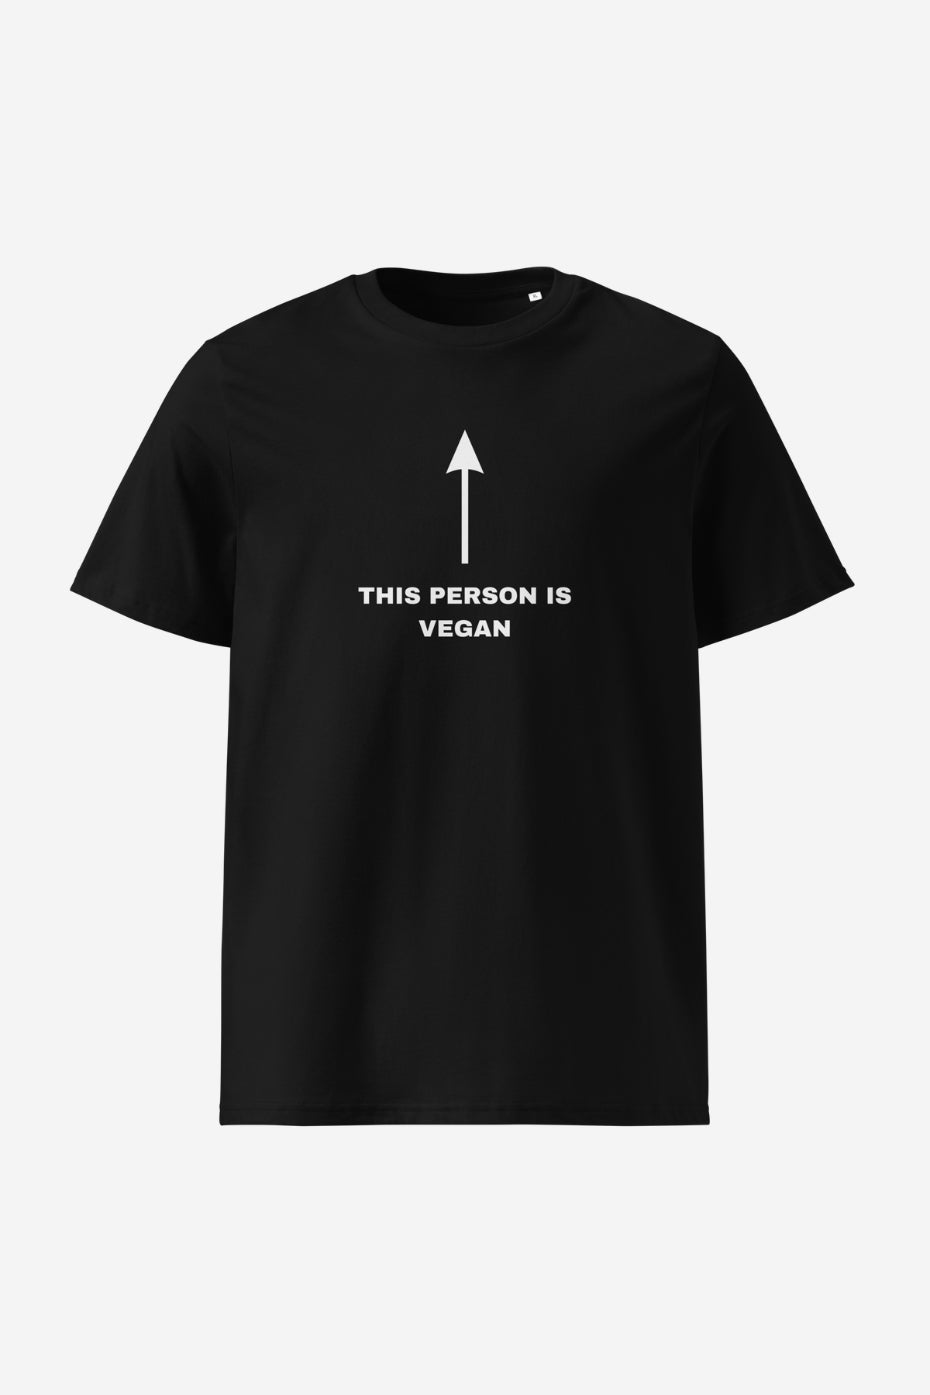 This Person is Vegan Unisex T-Shirt